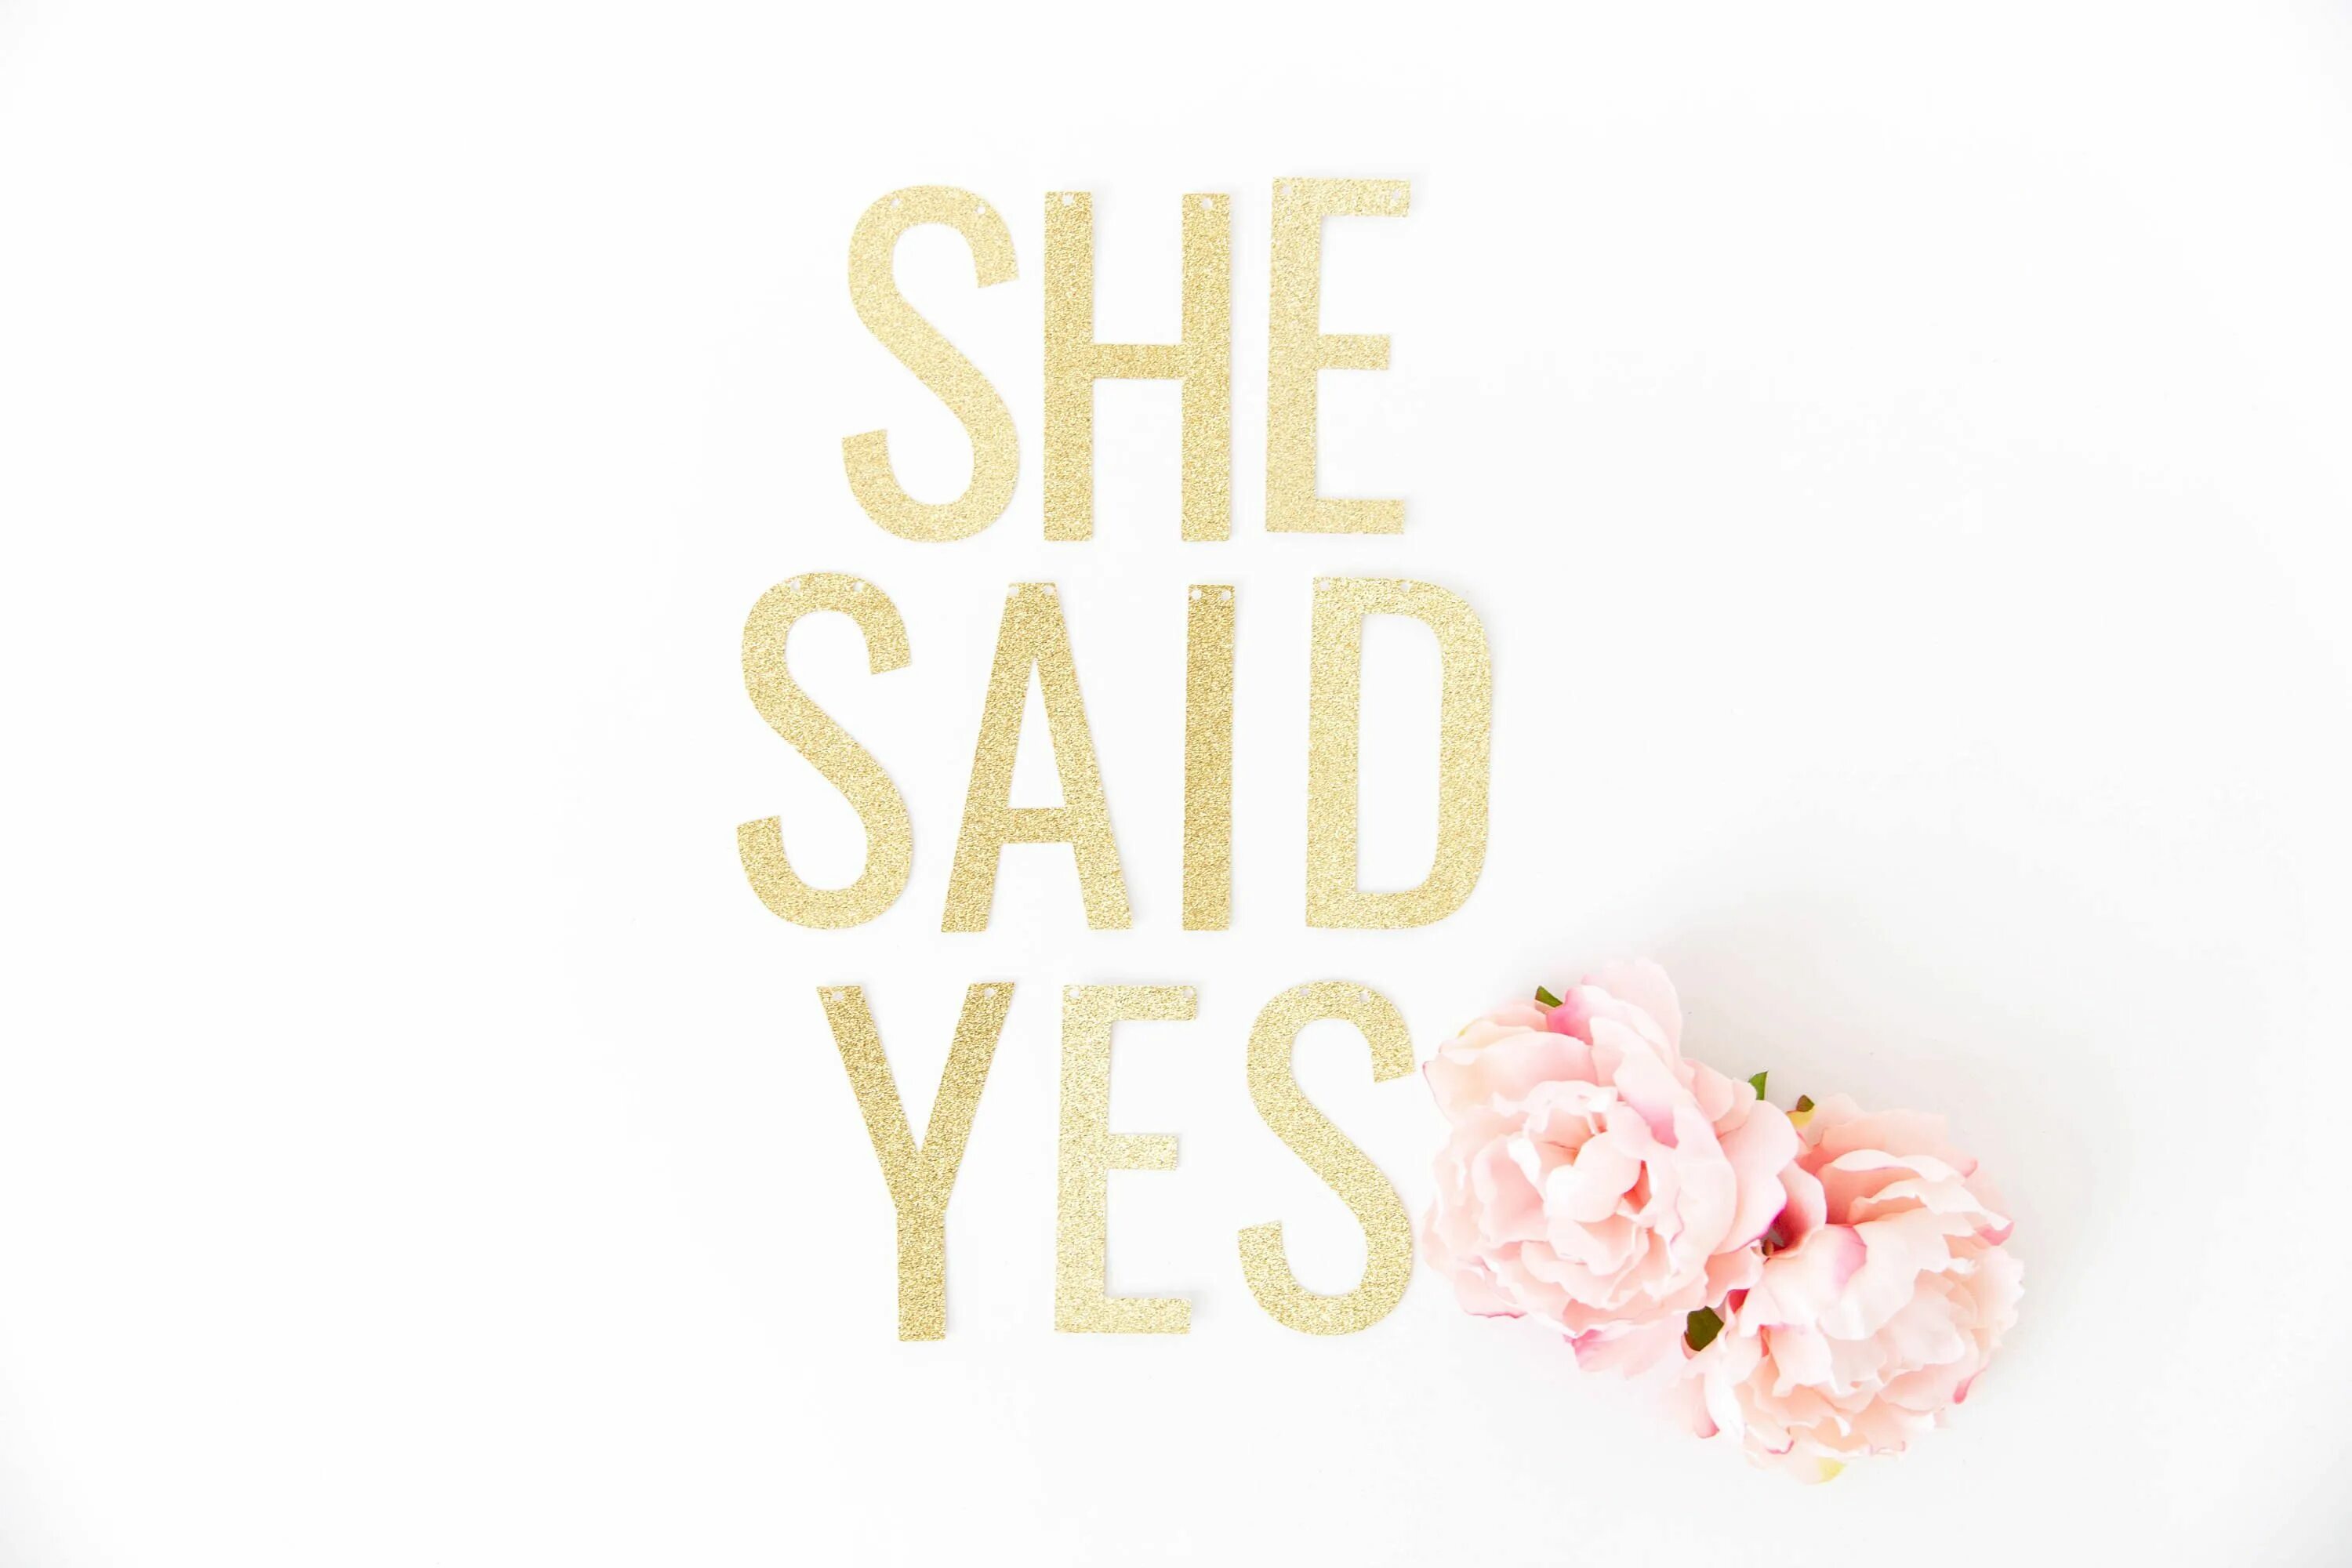 I have said yes. She said Yes картинка. Say Yes to the World картинка. She said Yes надпись. She said Yes фотообложка.